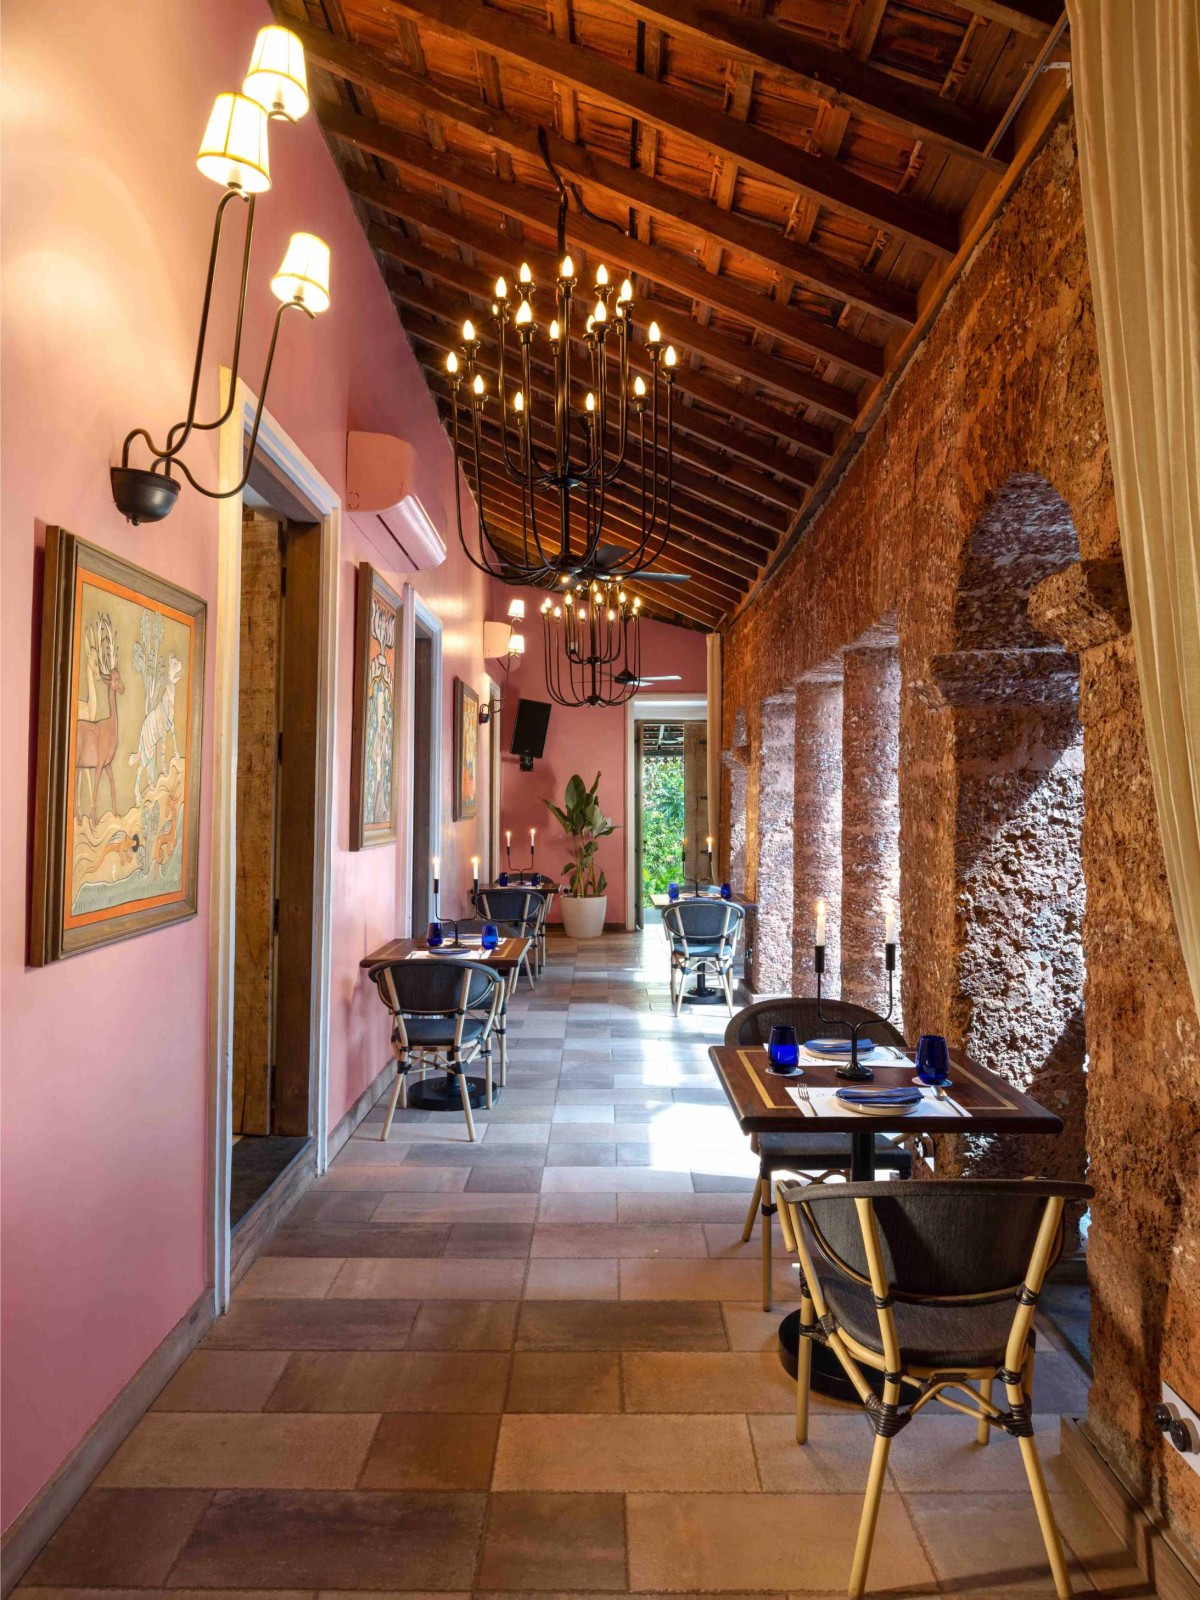 Interior view of Mystras Restaurant by Beyond Designs